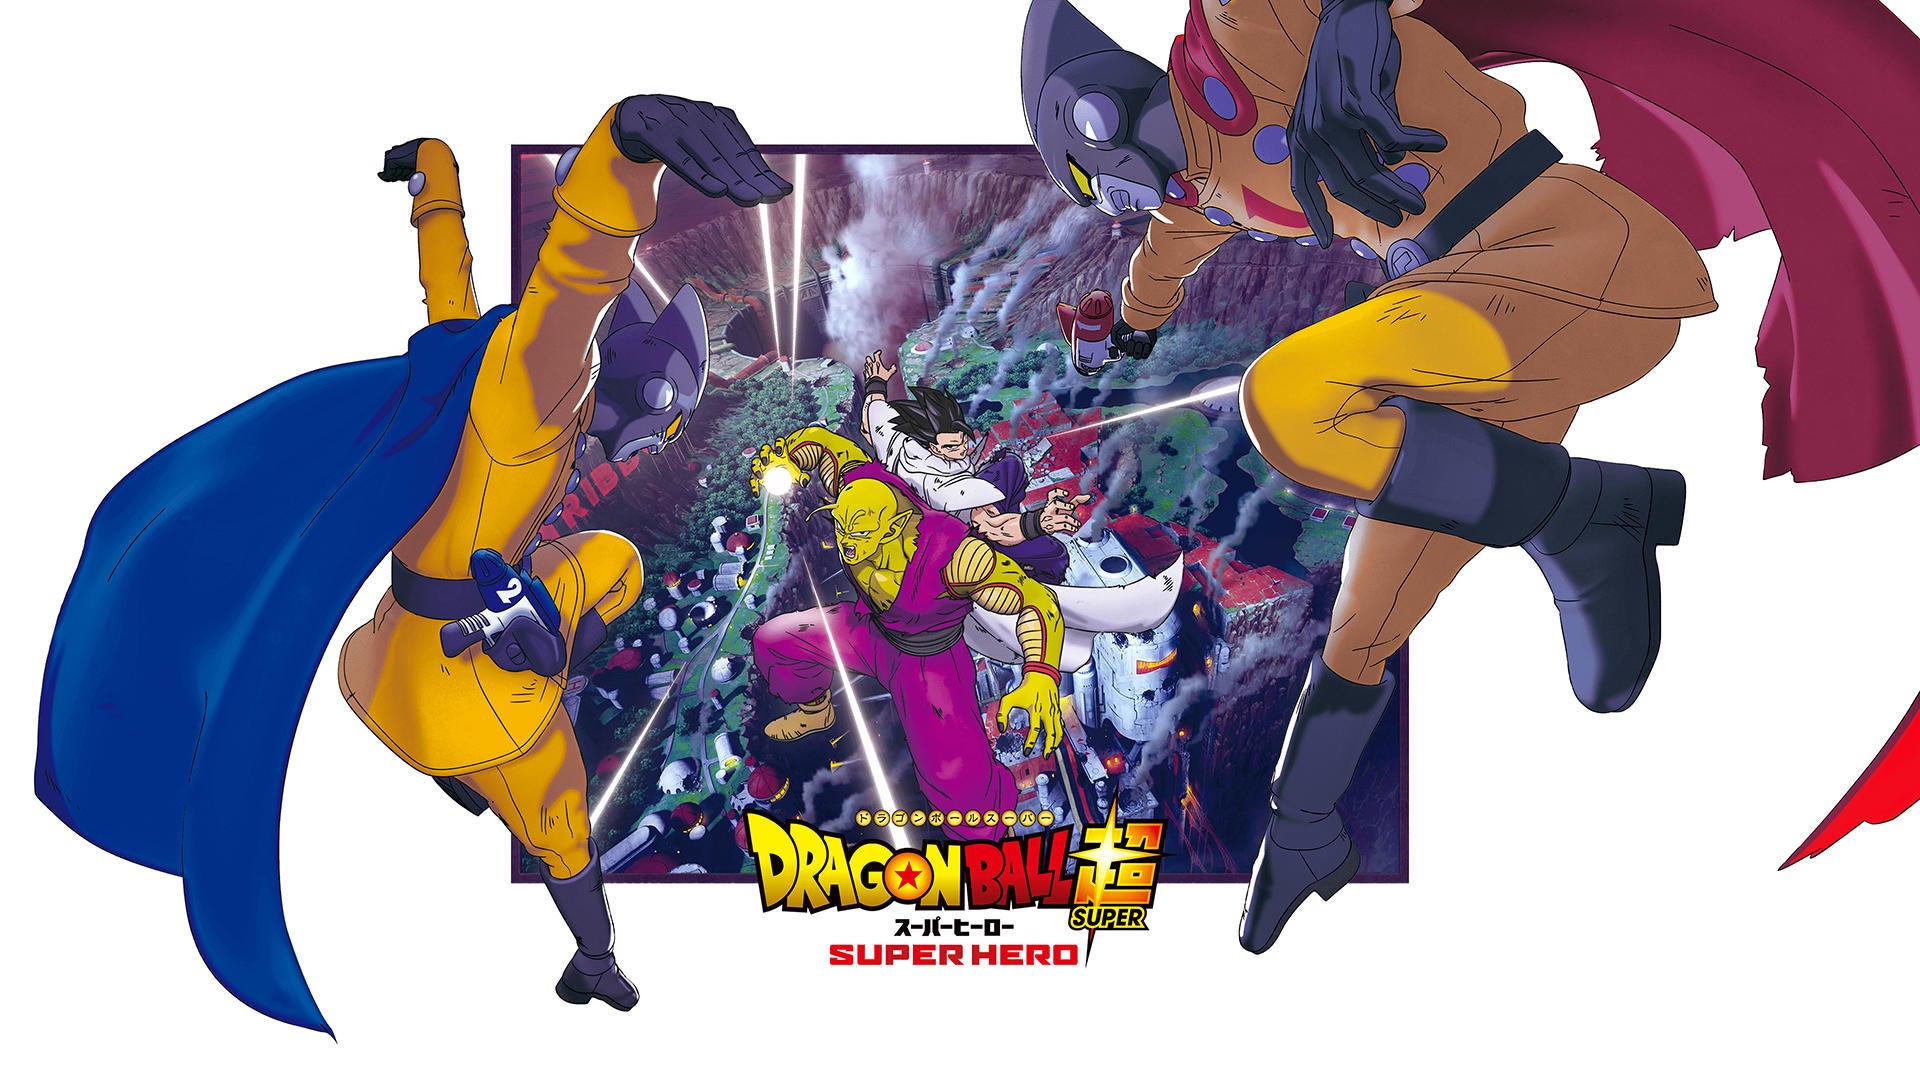 Dragon ball online characters  Dragon ball super manga, Anime dragon ball,  Anime dragon ball super